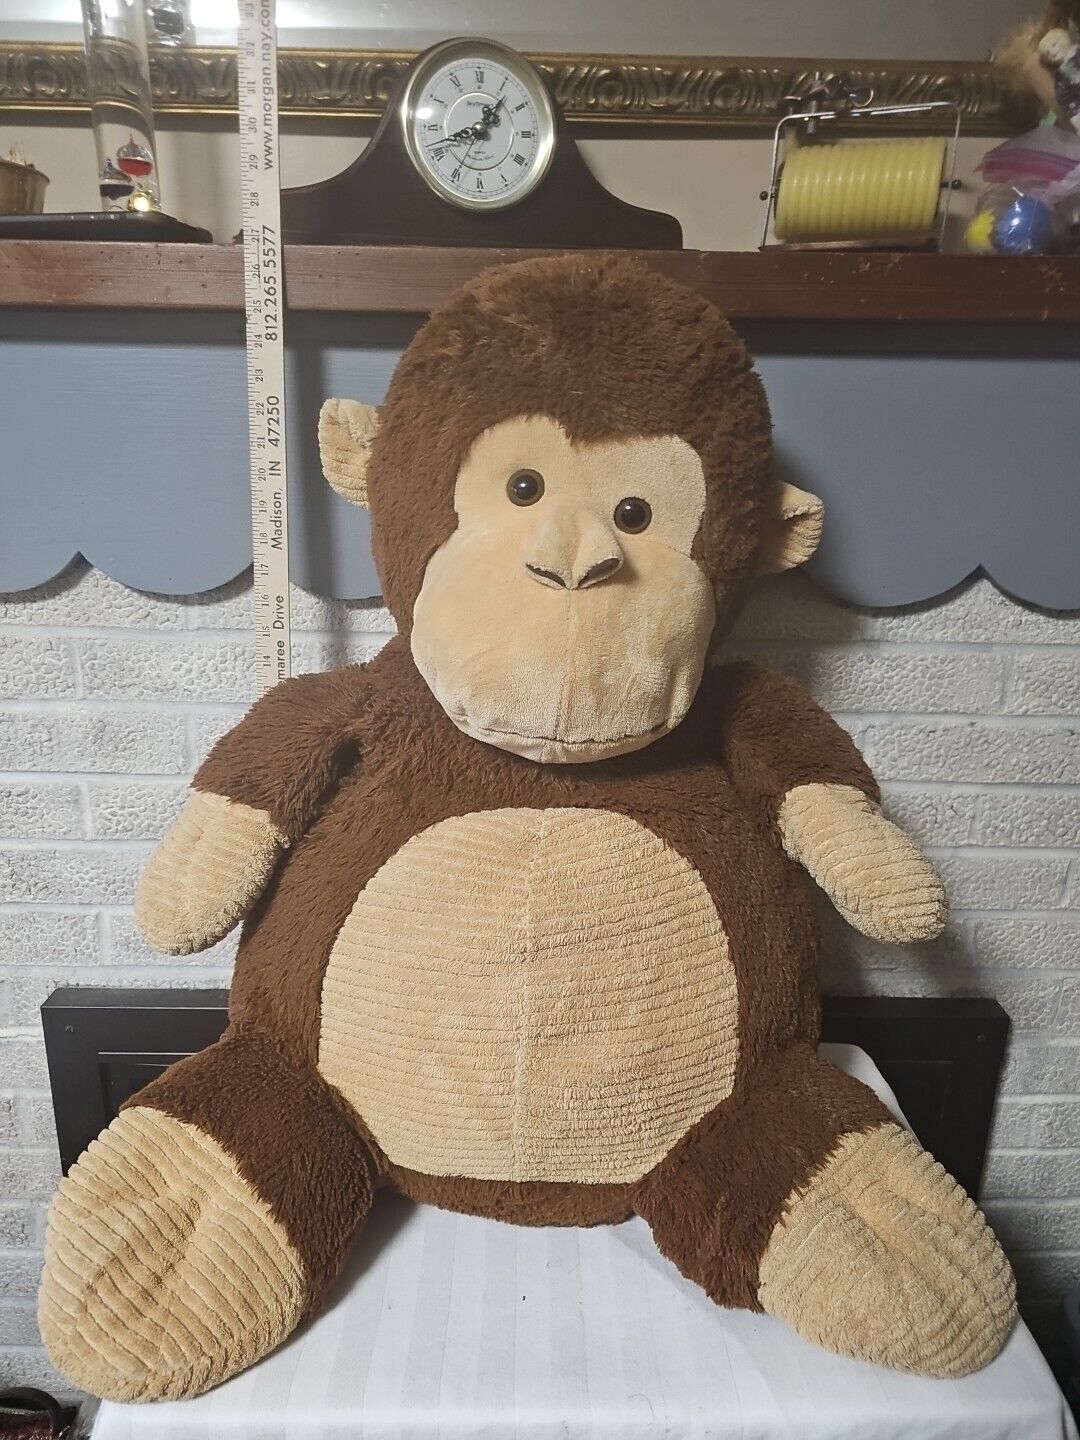  Best Made Toy International Giant Big Fat 32in Ape Monkey Plush